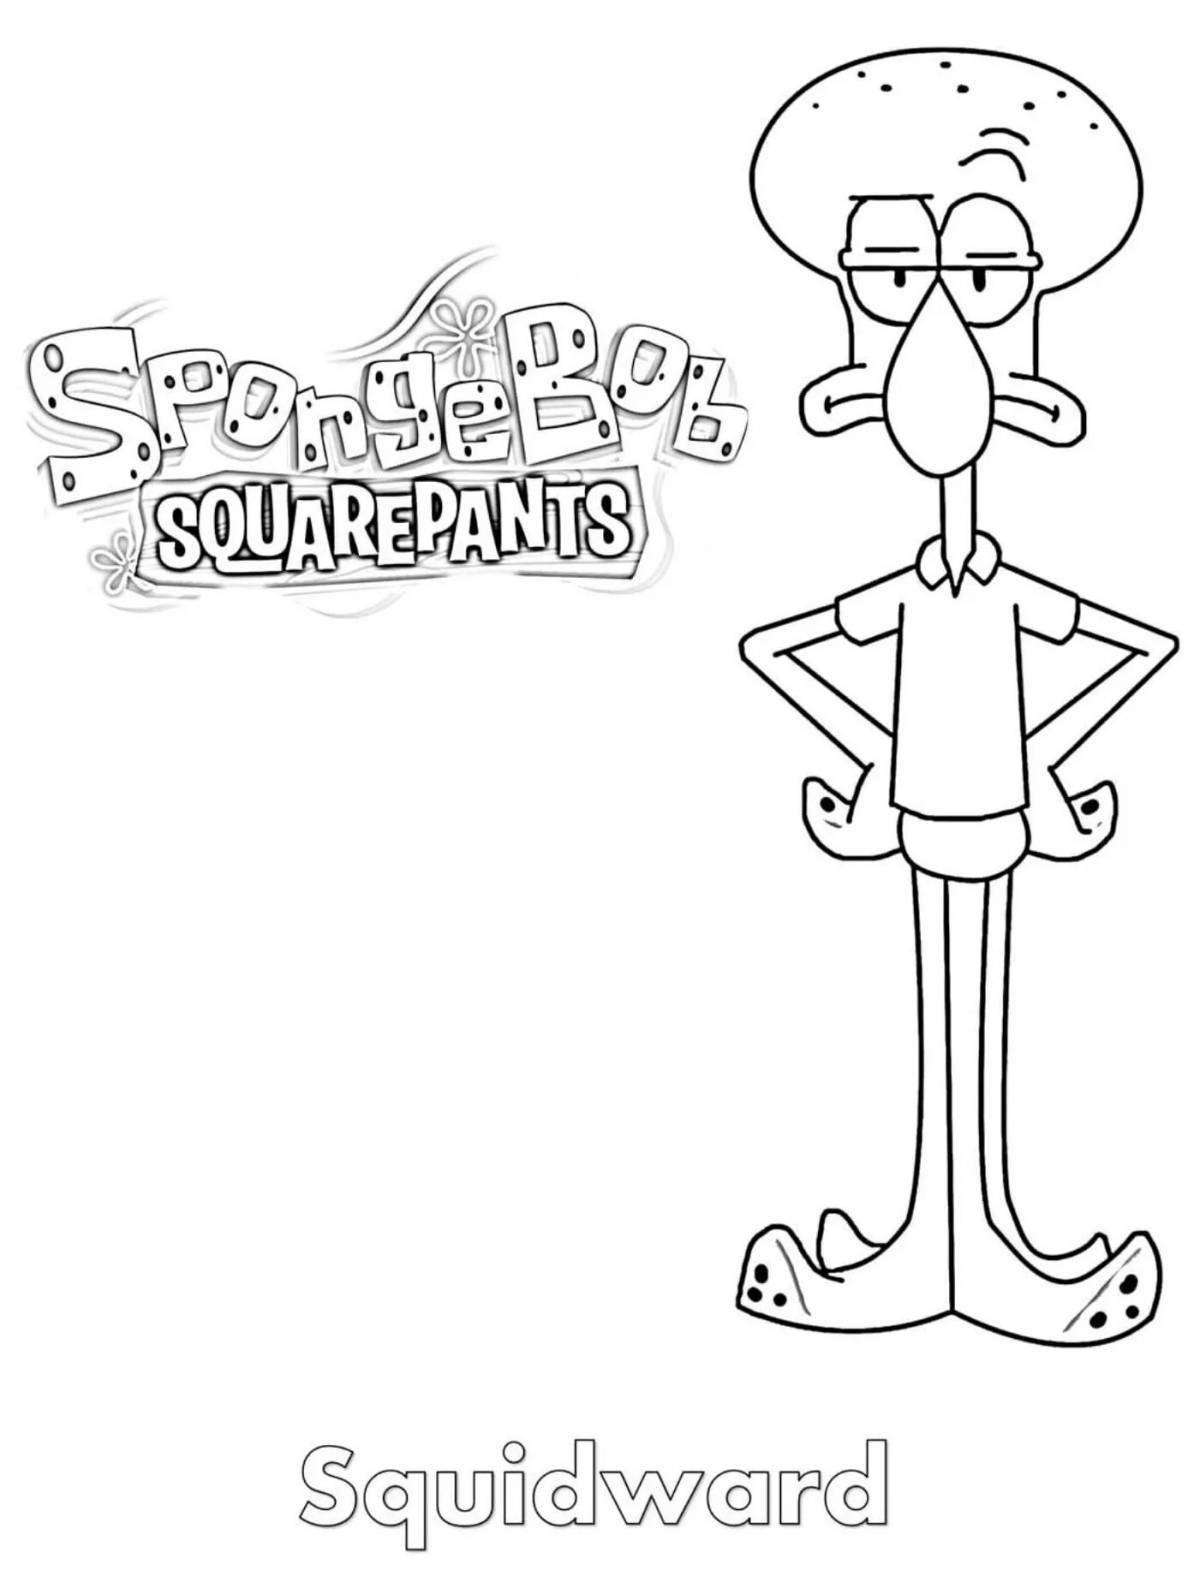 Sponge bob squidward #2